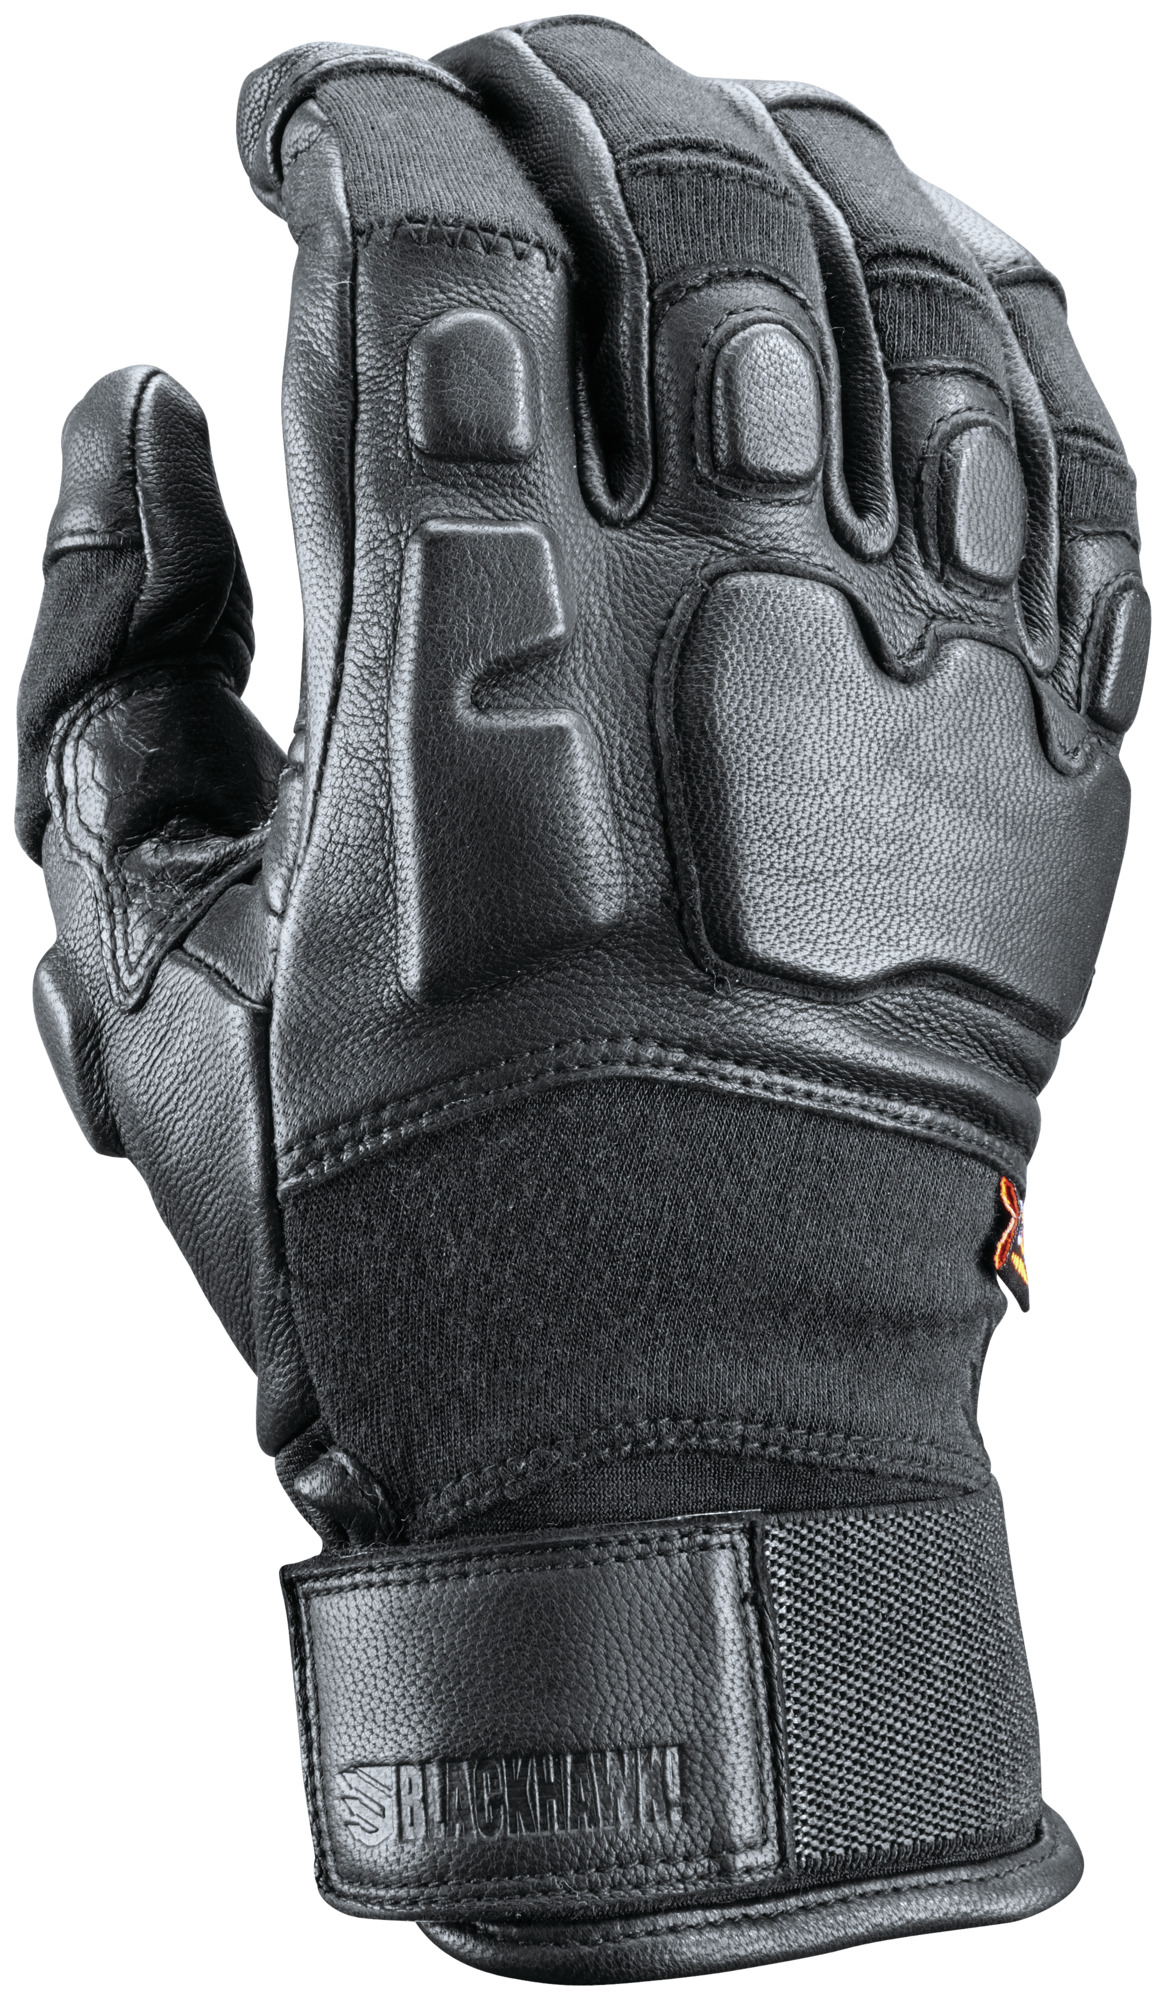 Black BLACKHAWK Gp003Bkmd Fortify Winter Ops Glove Medium 